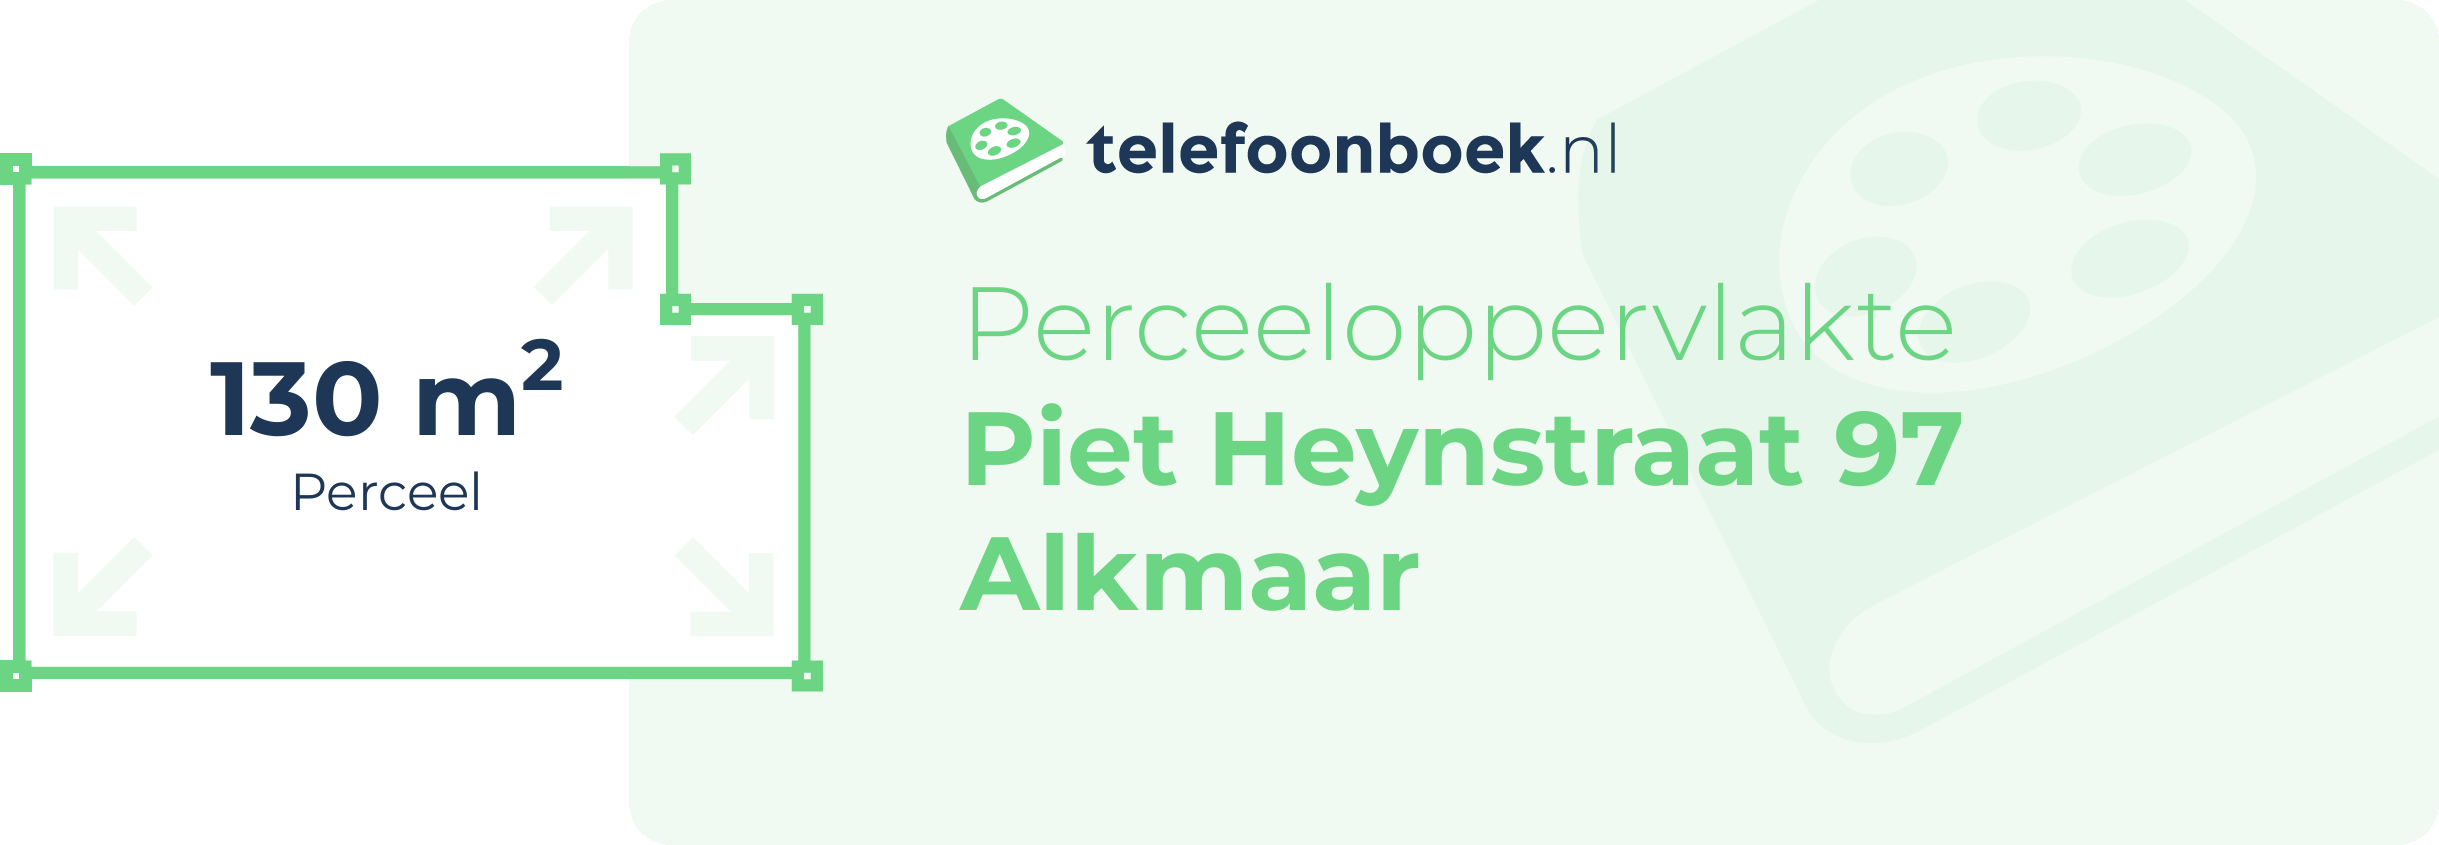 Perceeloppervlakte Piet Heynstraat 97 Alkmaar